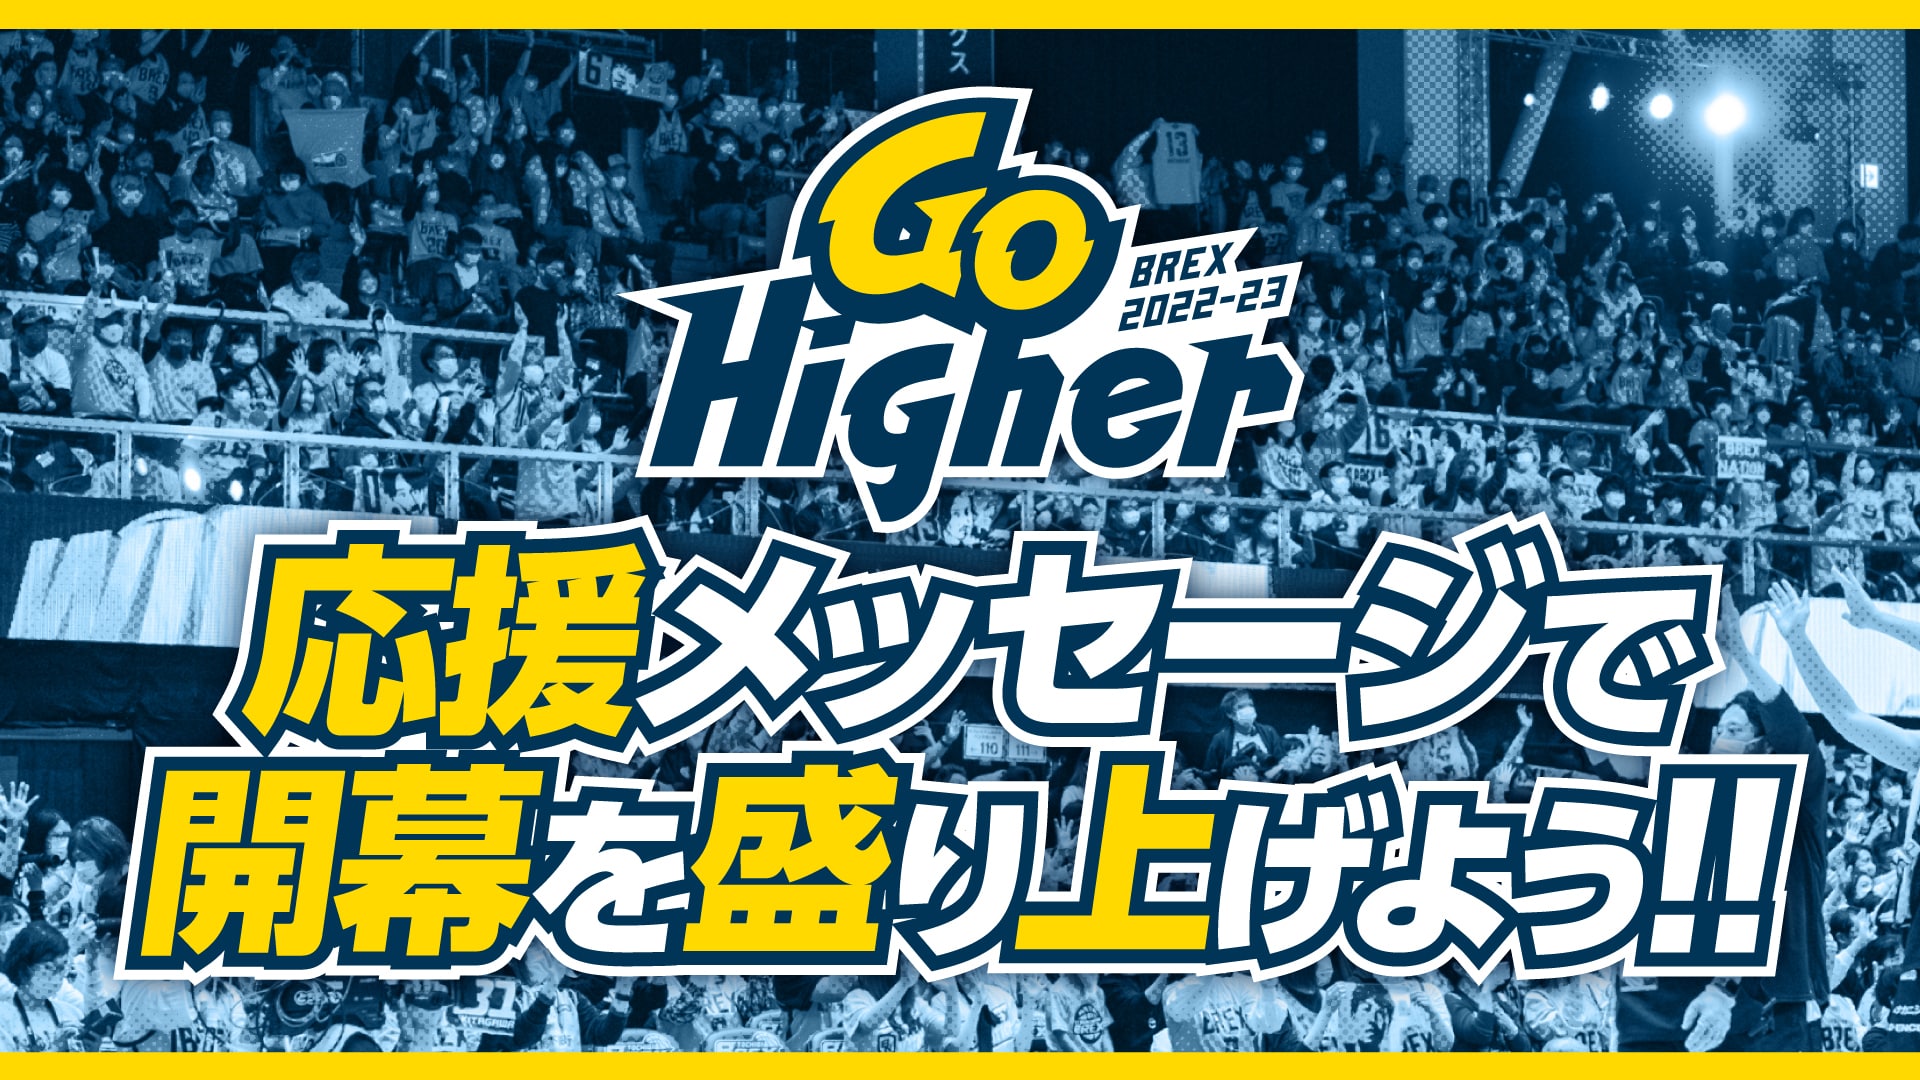 「Go Higher」応援メッセージ募集 キービジュアル